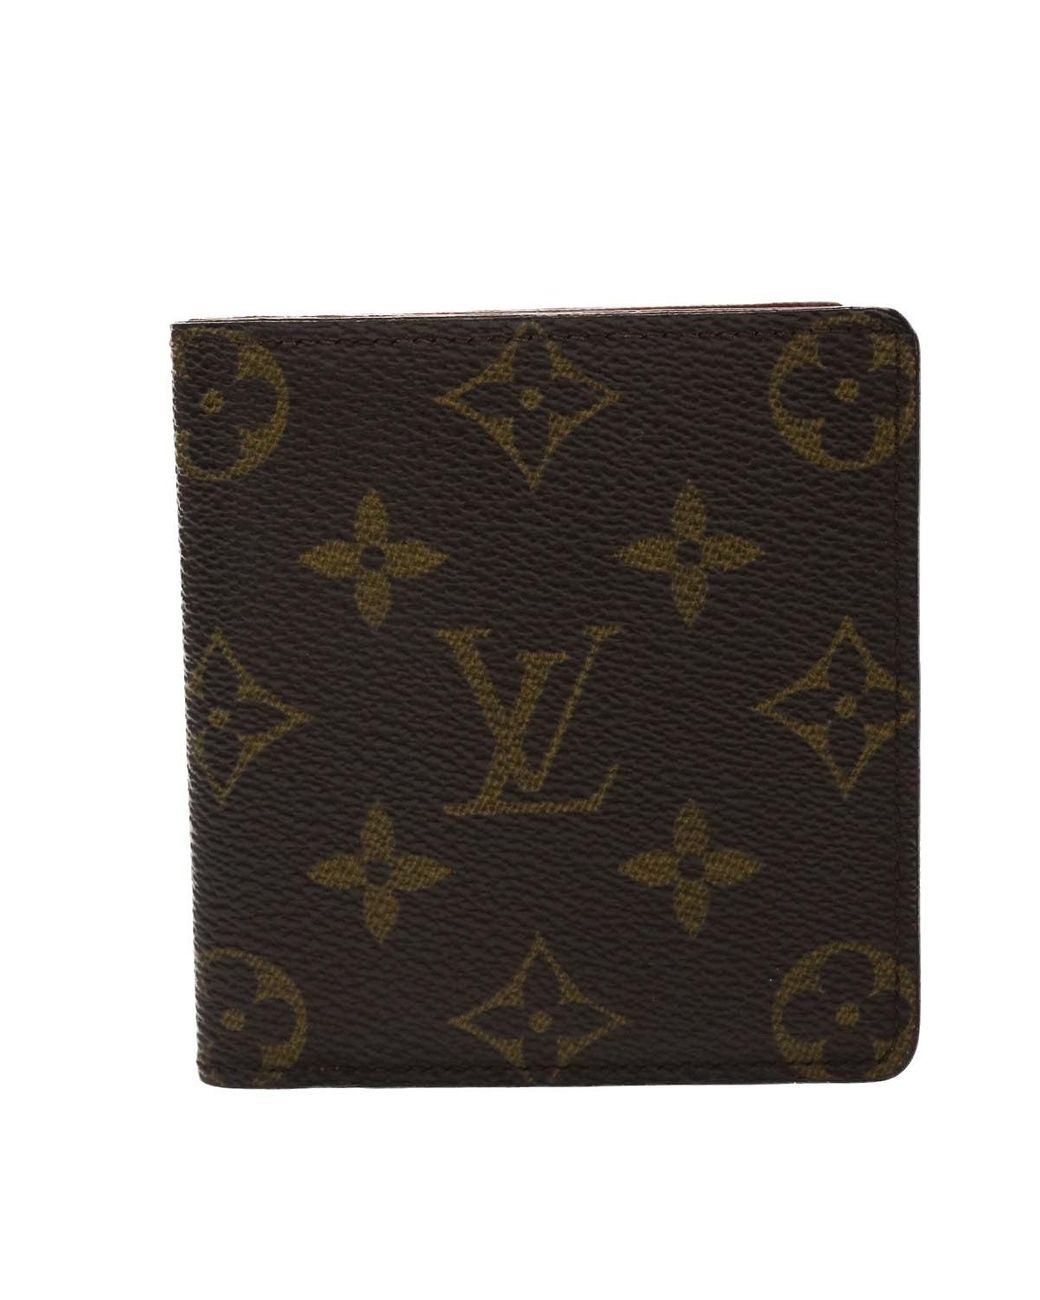 Louis Vuitton Portefeuille Sarah Brown Canvas Wallet (Pre-Owned)